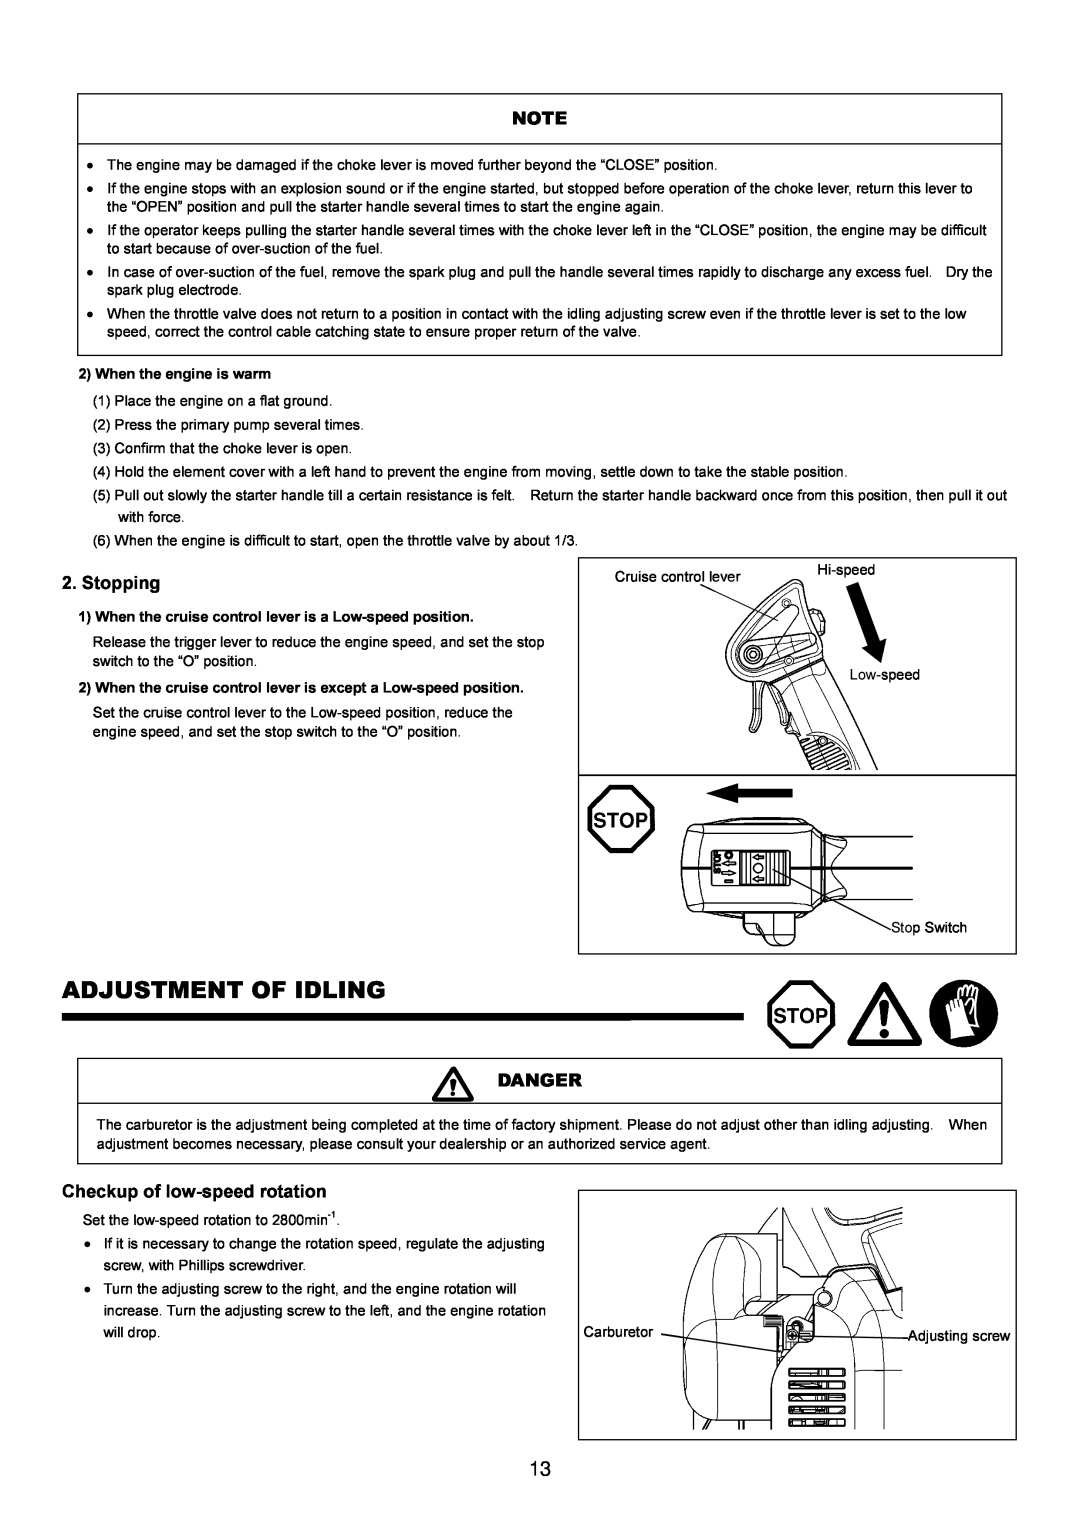 Makita BBX7600CA instruction manual Adjustment Of Idling, Stopping, Danger, Checkup of low-speed rotation 